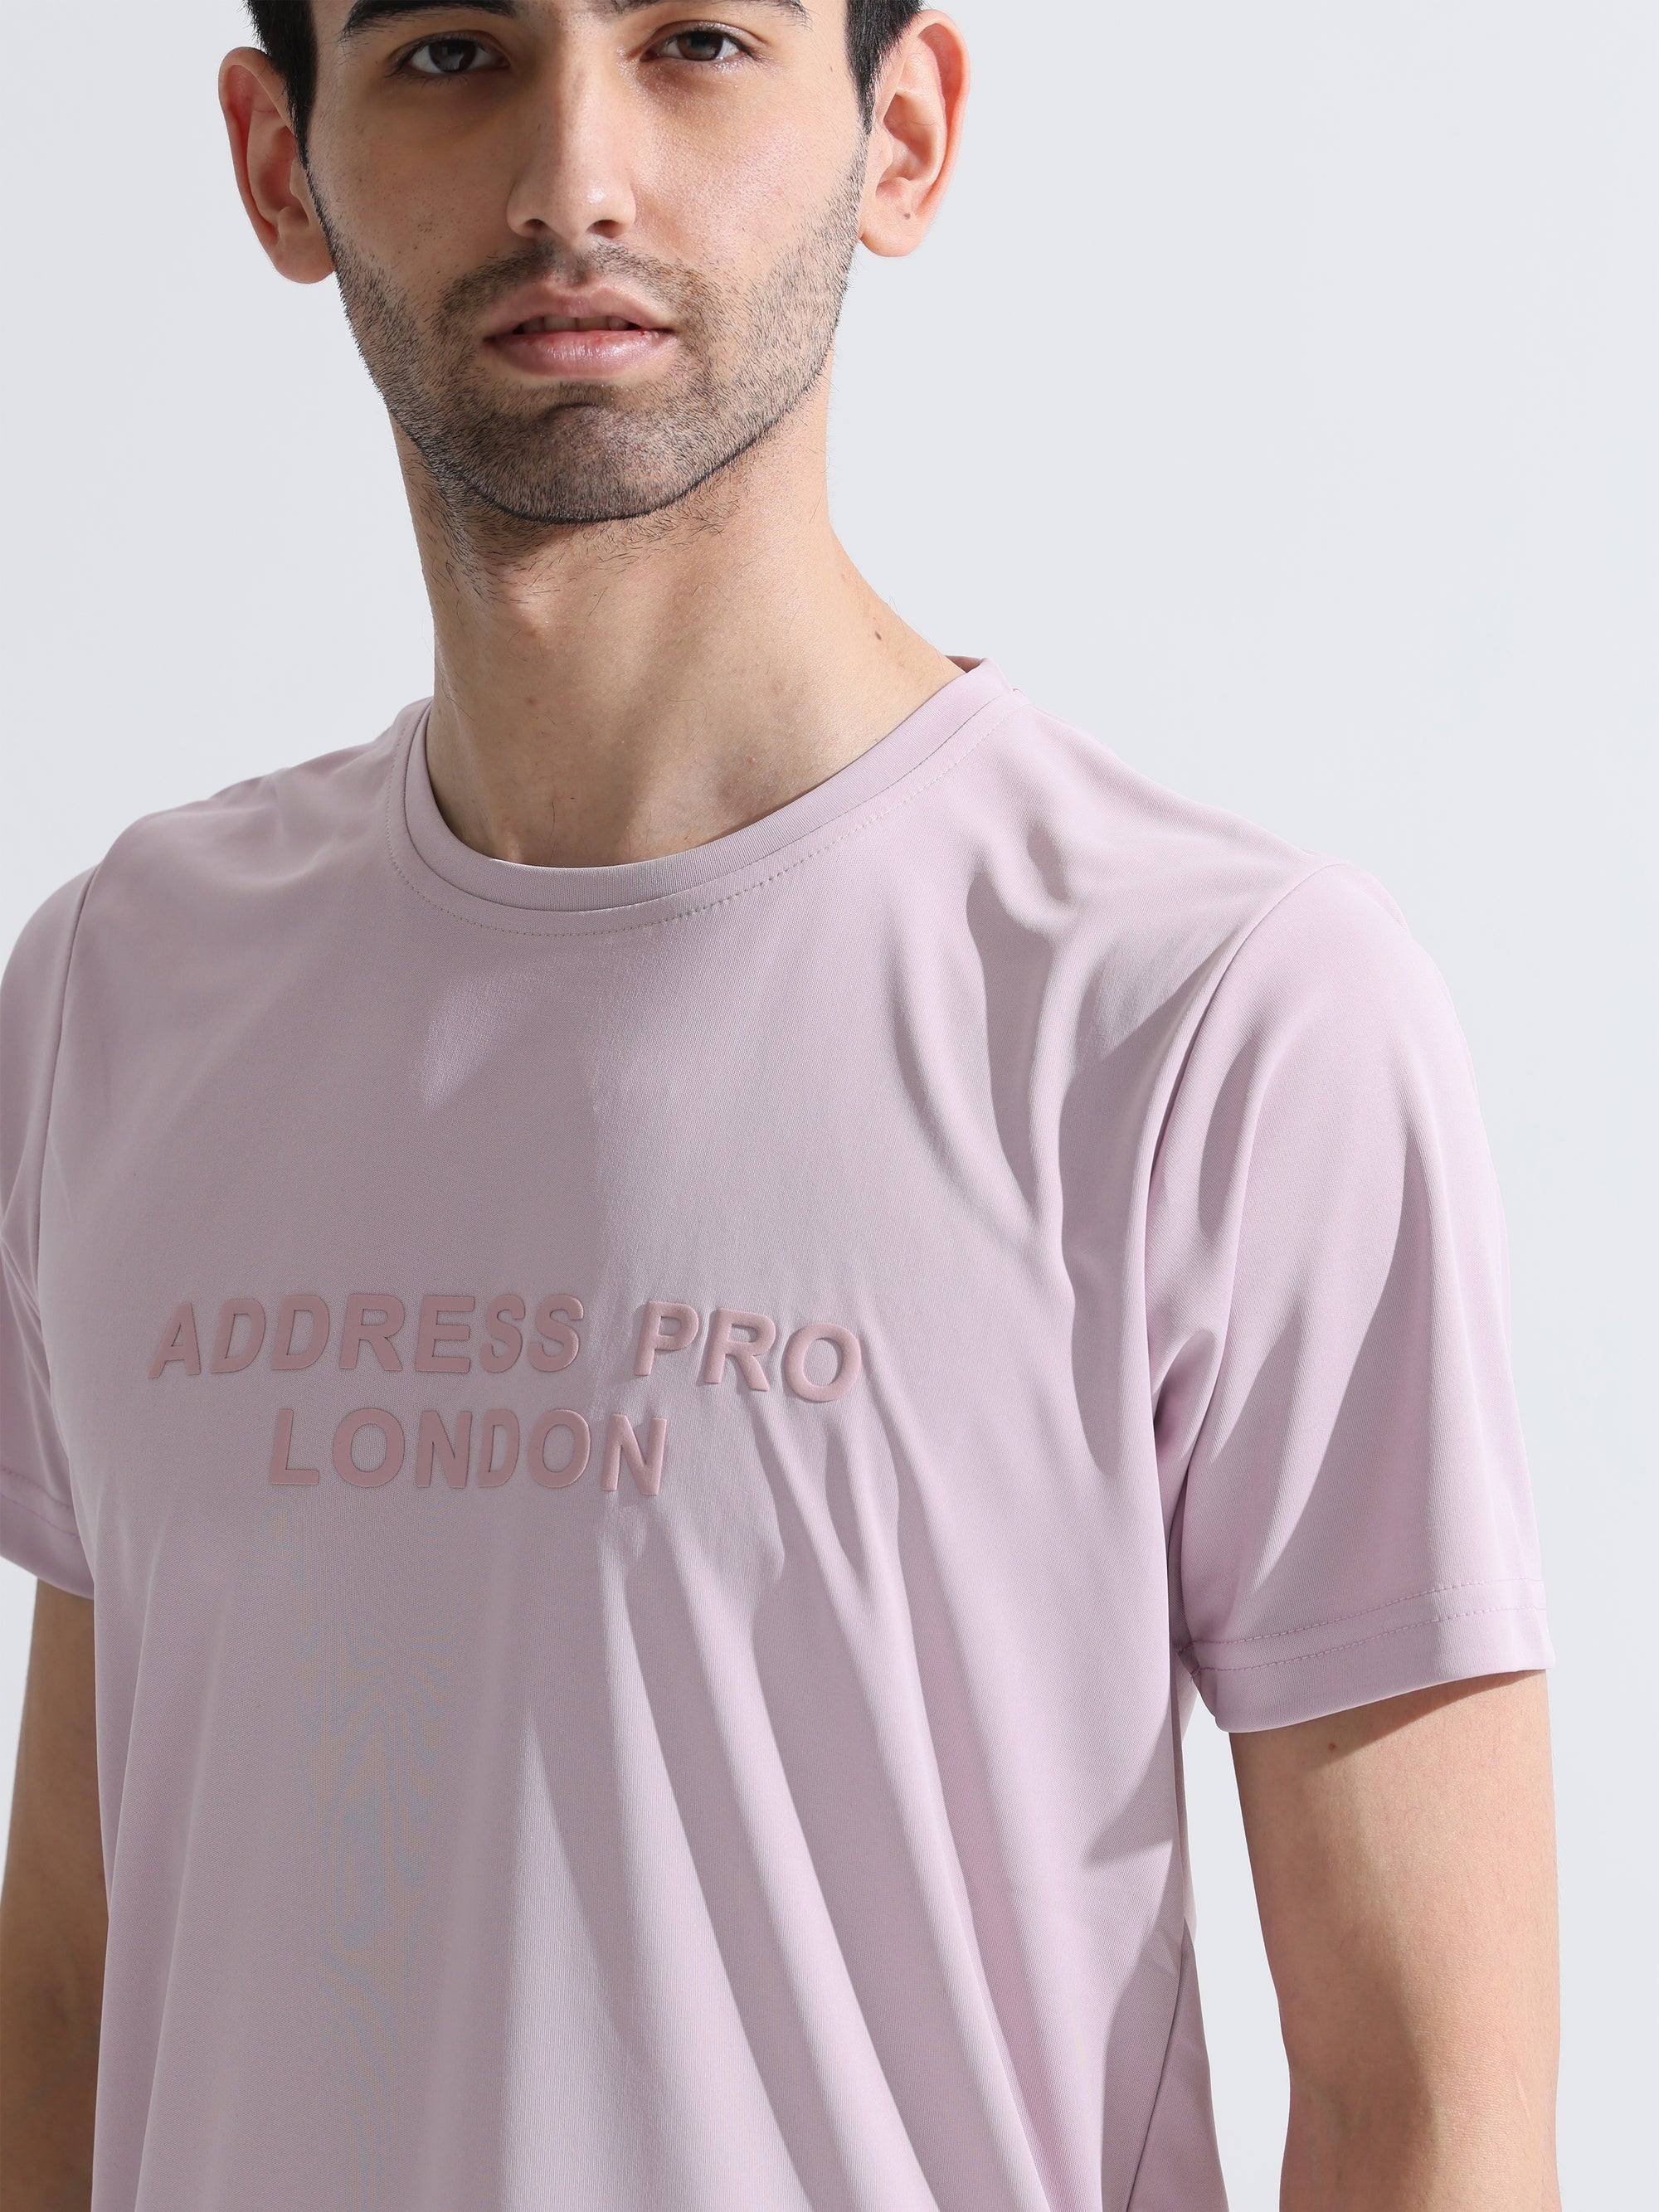 Address pro London Pink tee